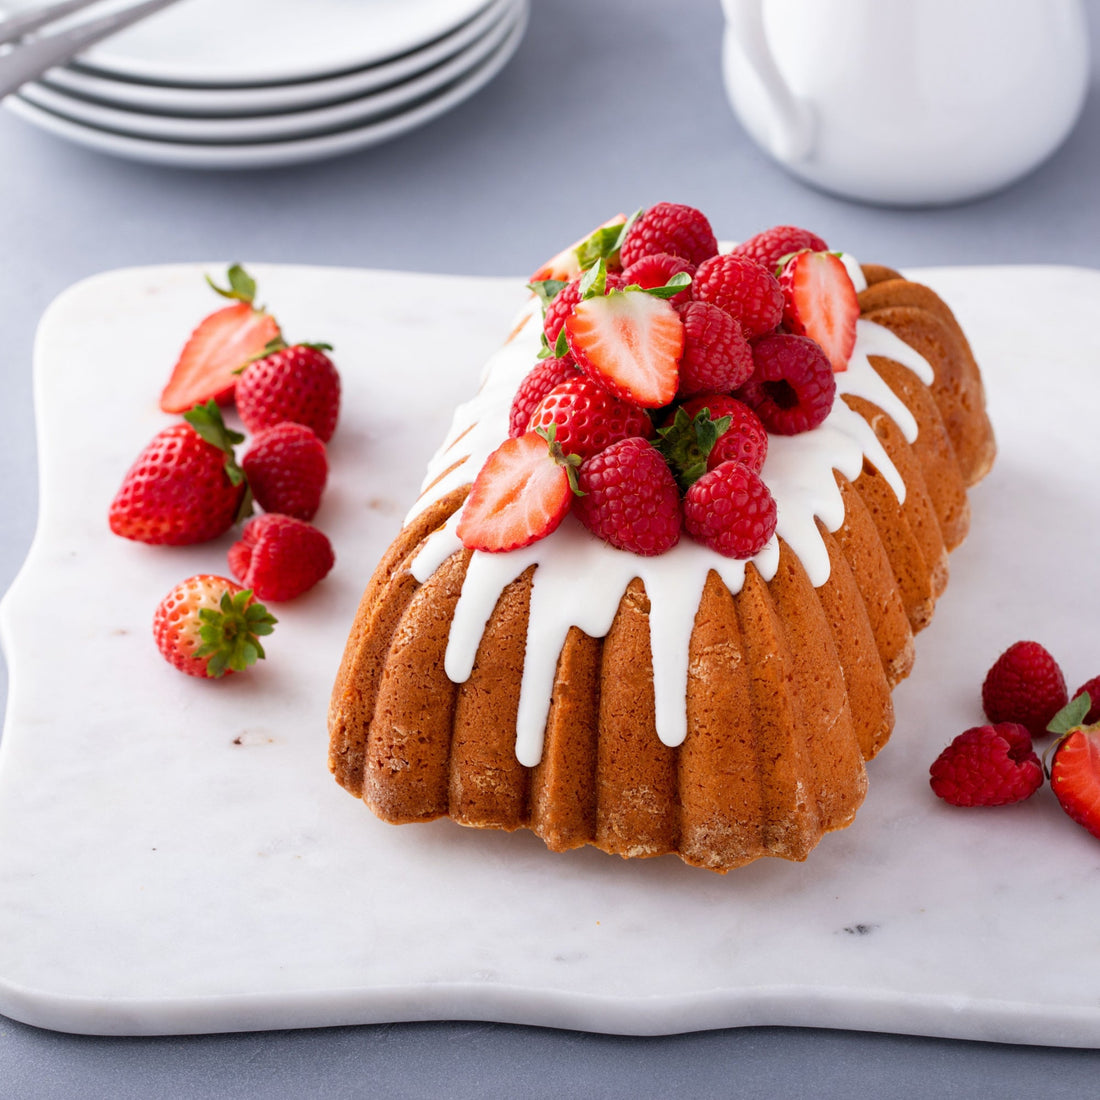 Homemade Strawberry Pound Cake: A Step-by-Step Guide